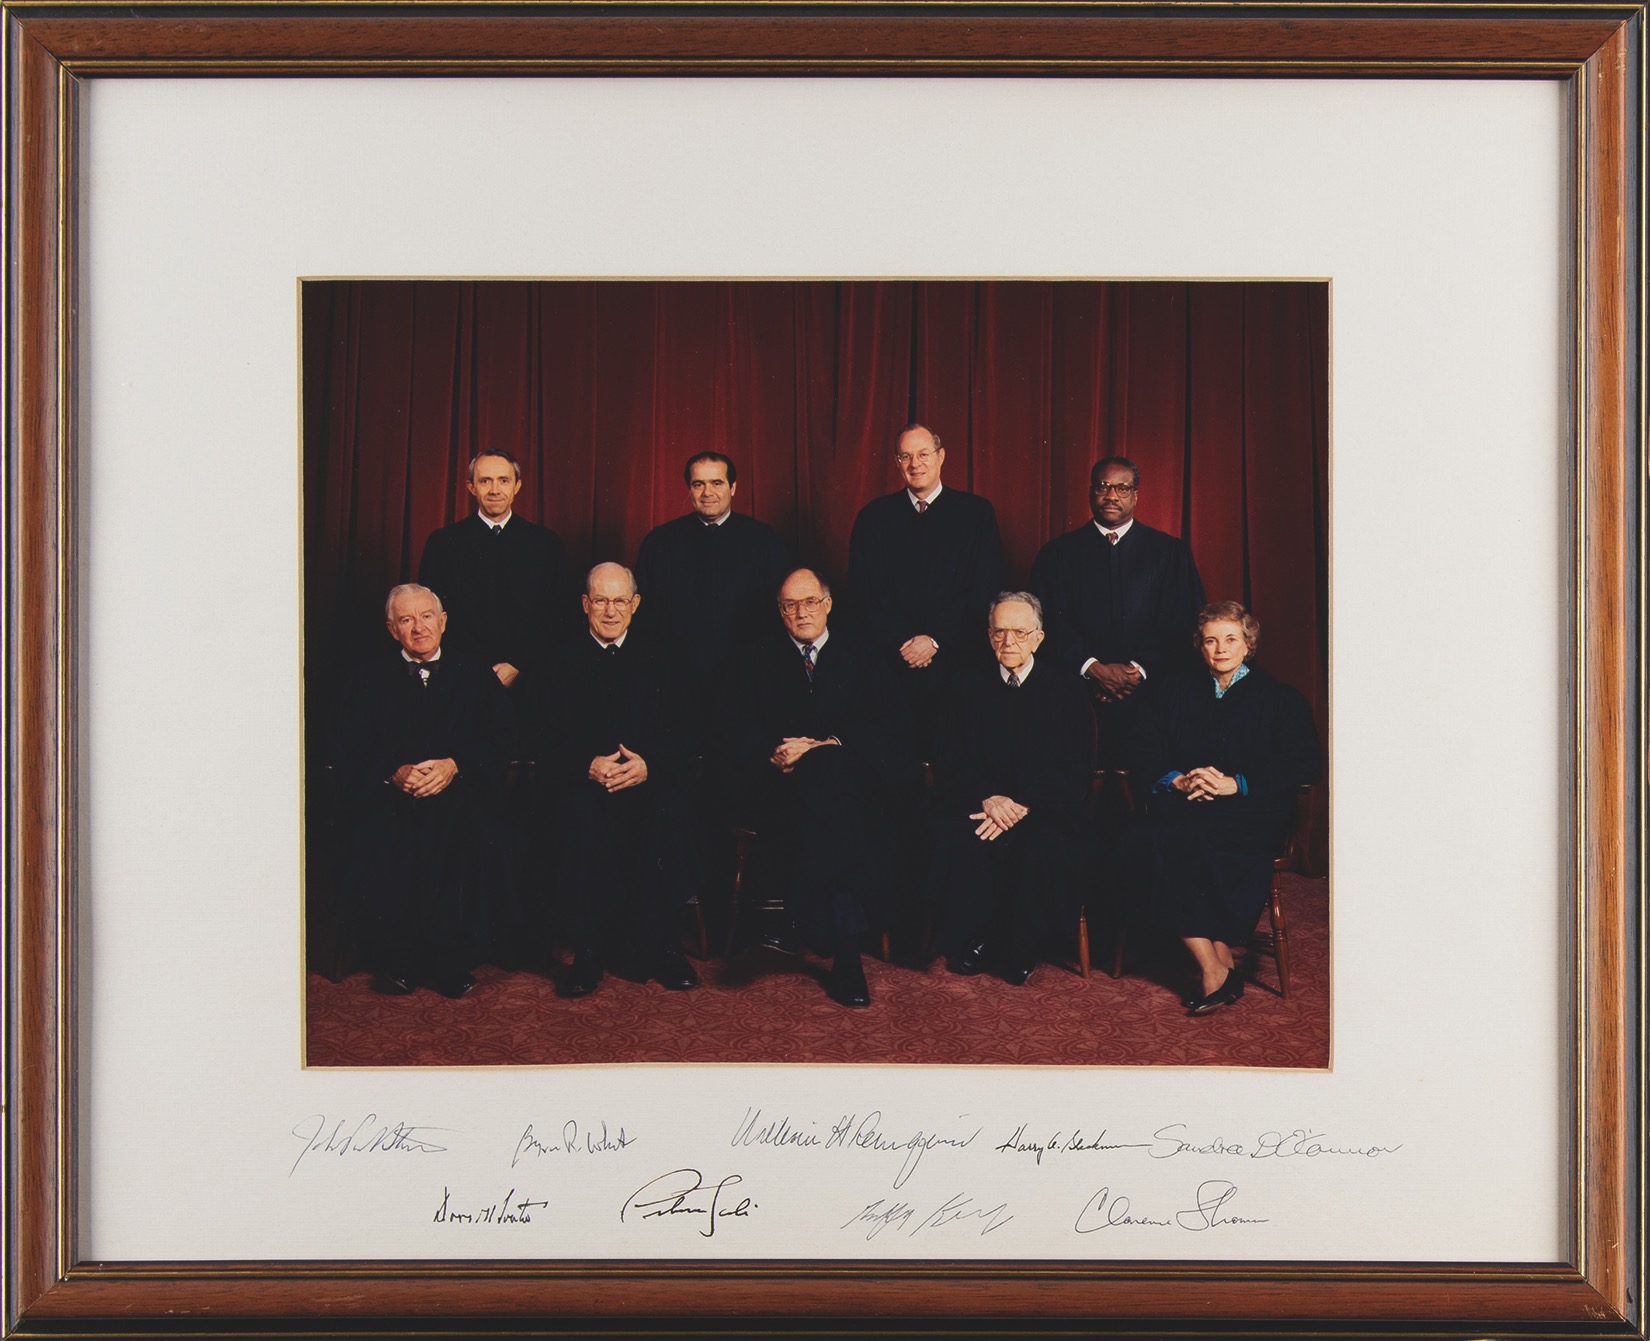 Lot #153 Rehnquist Court Oversized Signed Photograph - Image 1